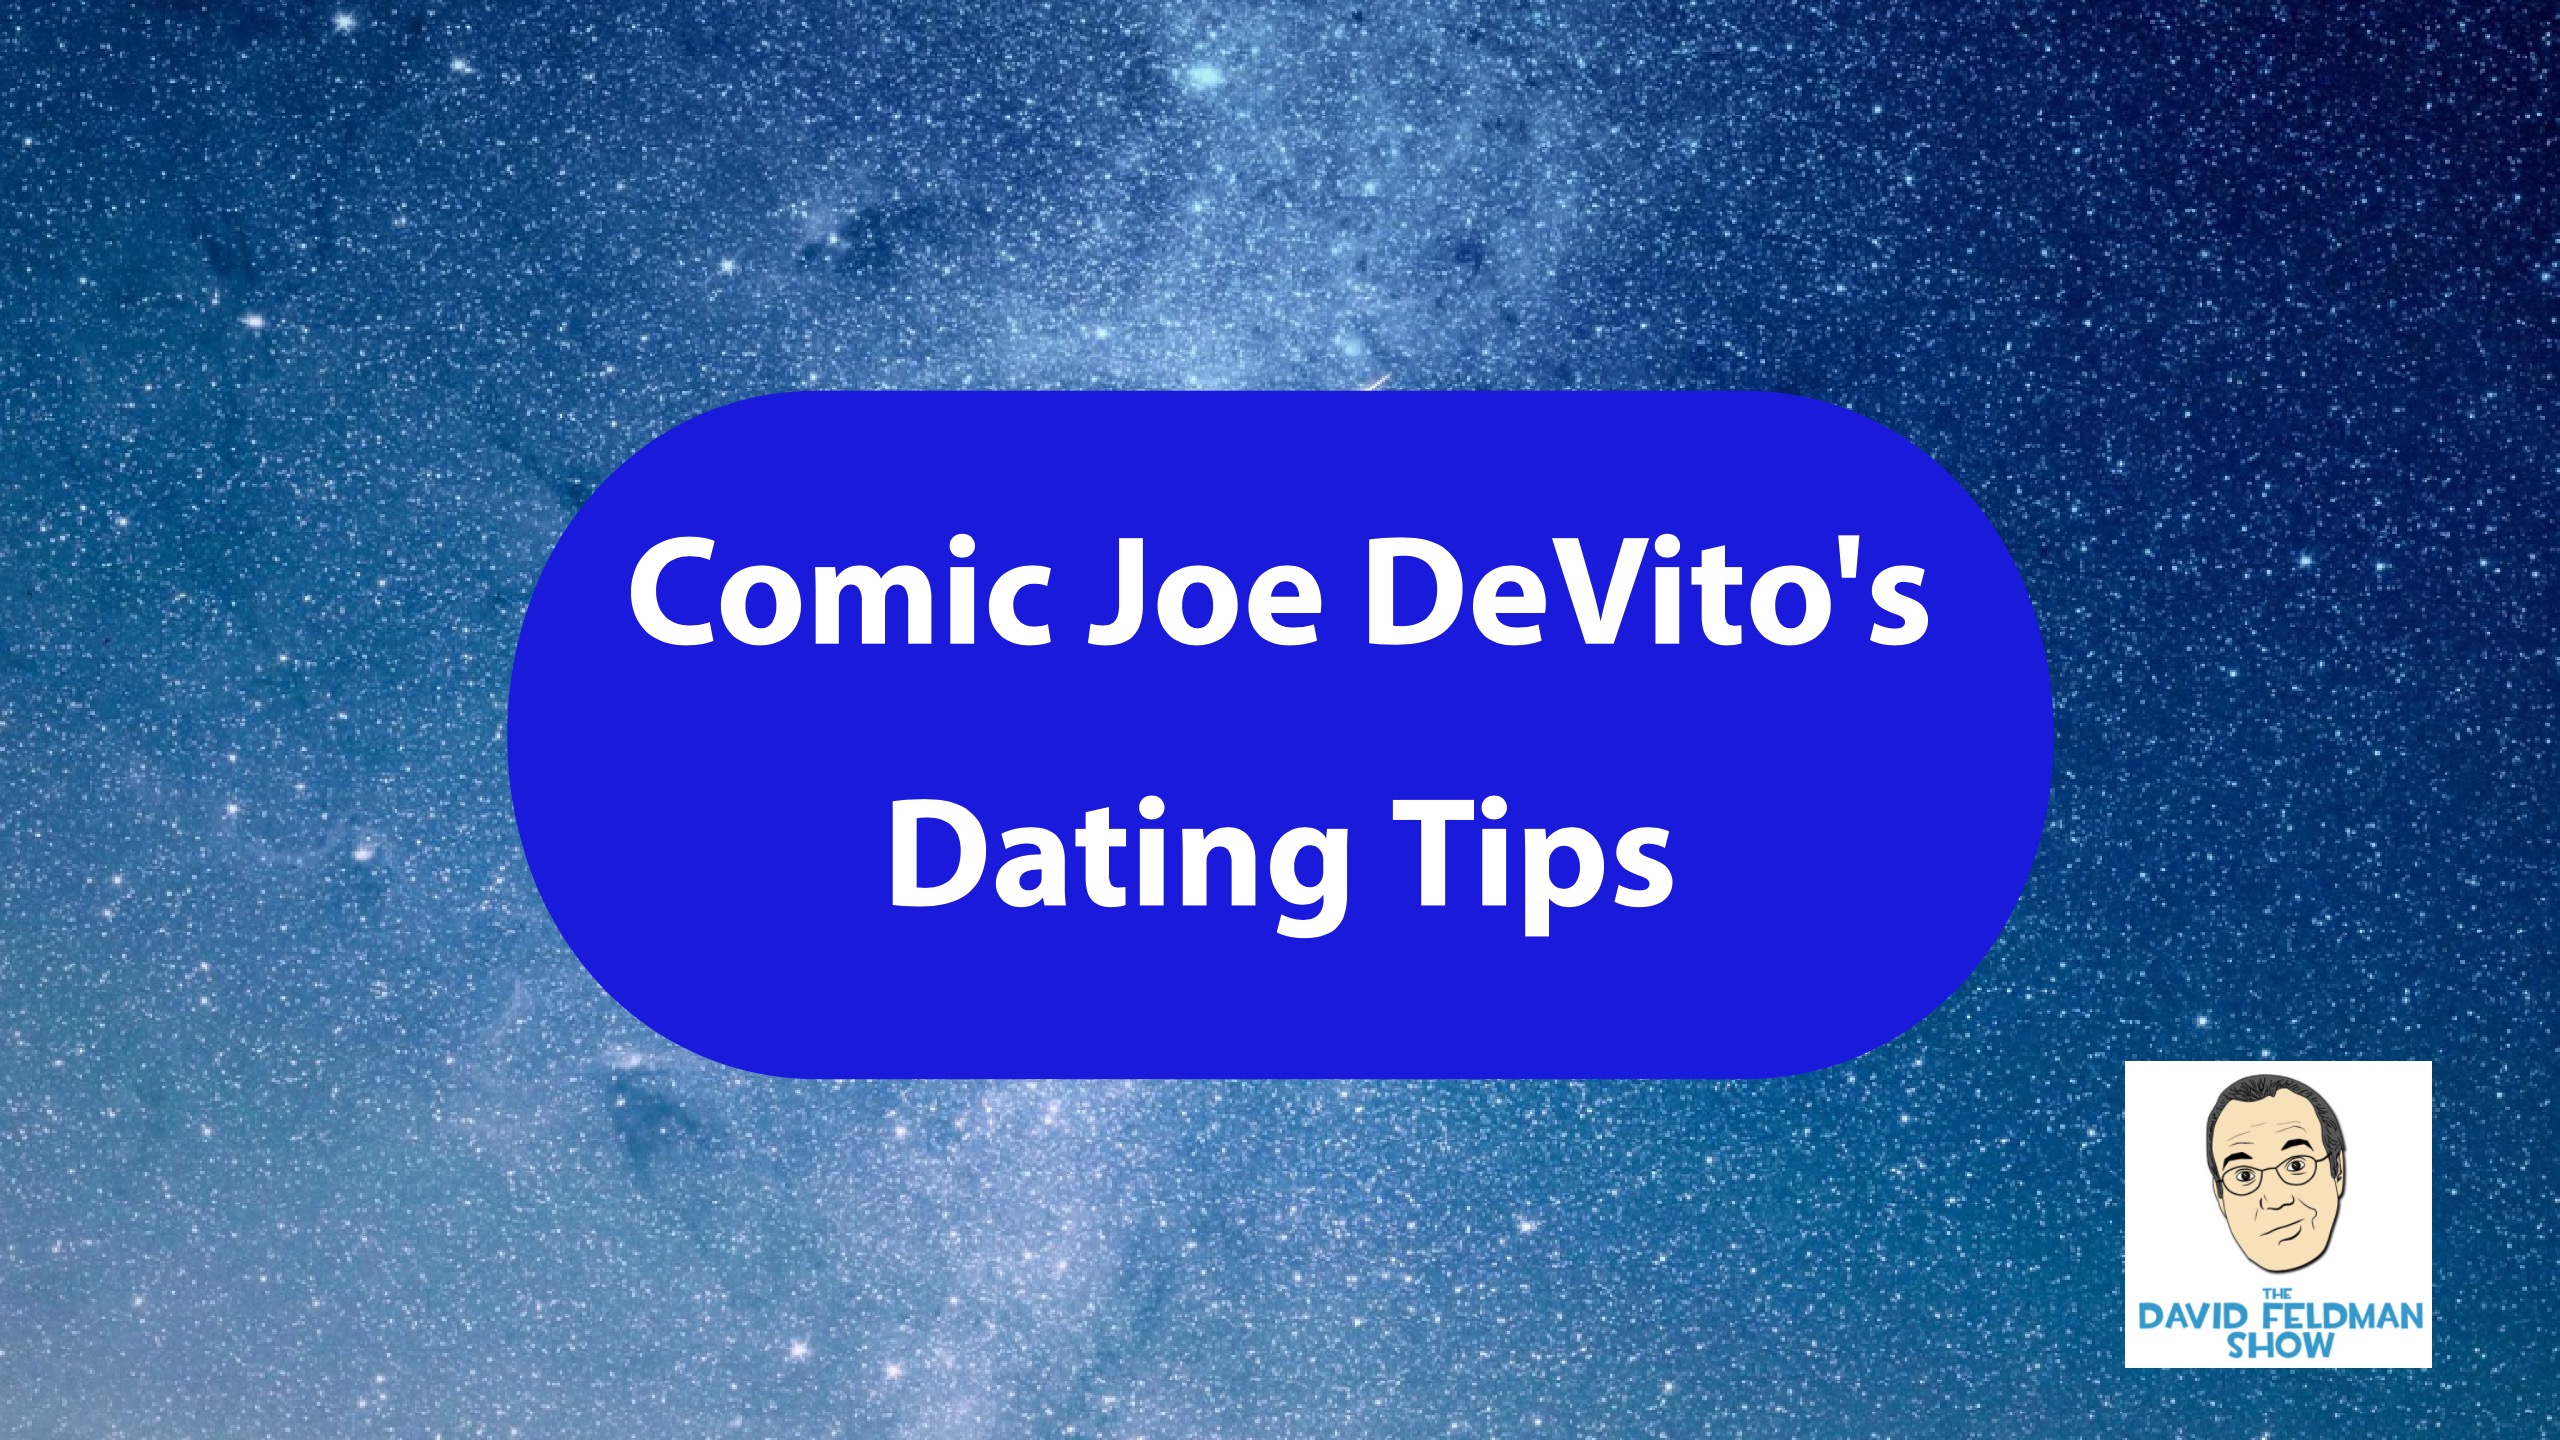 Joe Devito's dating tips